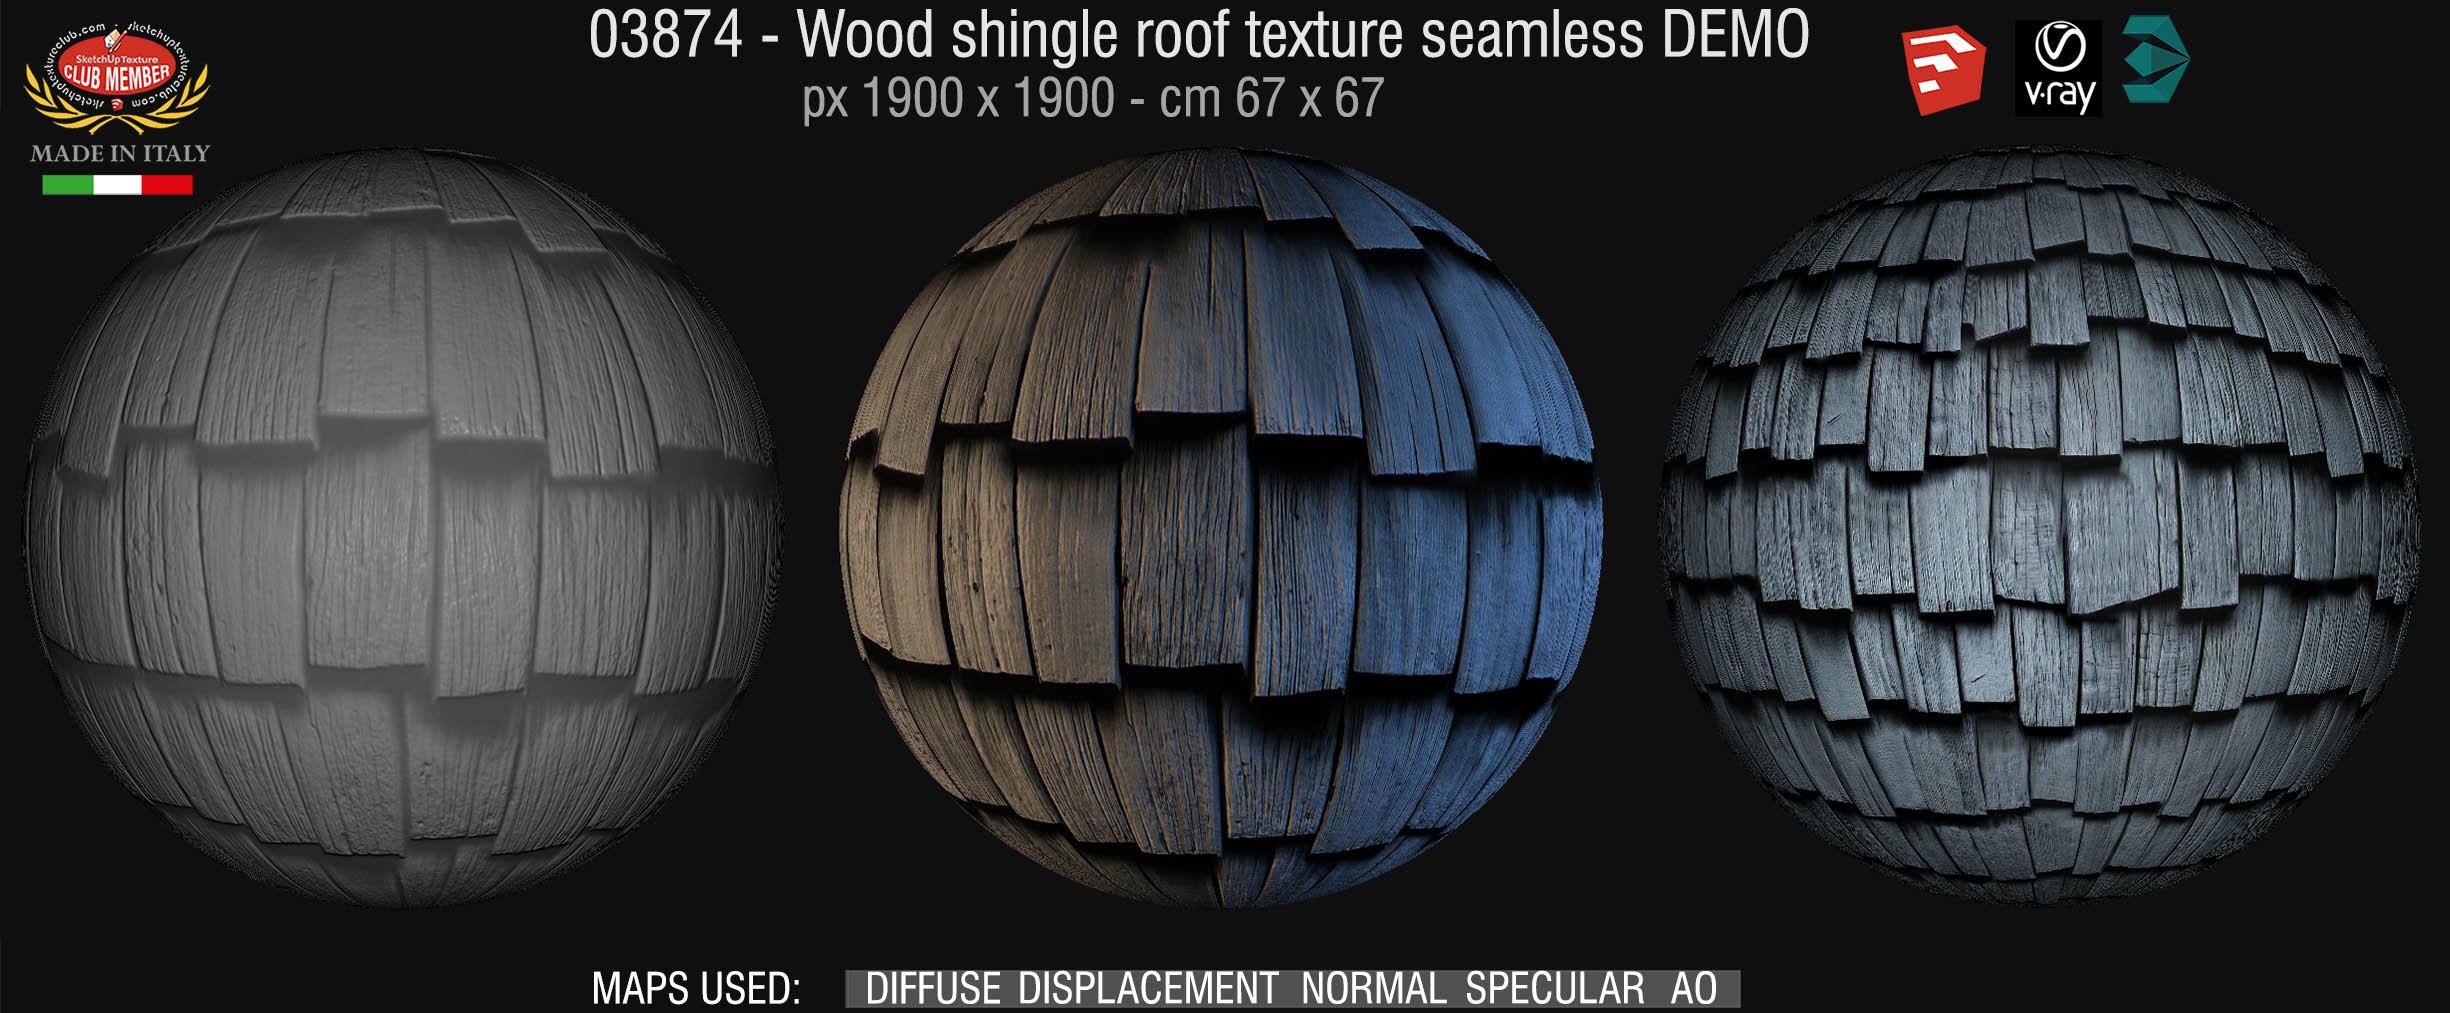 03874 Wood shingle roof texture seamless + maps DEMO